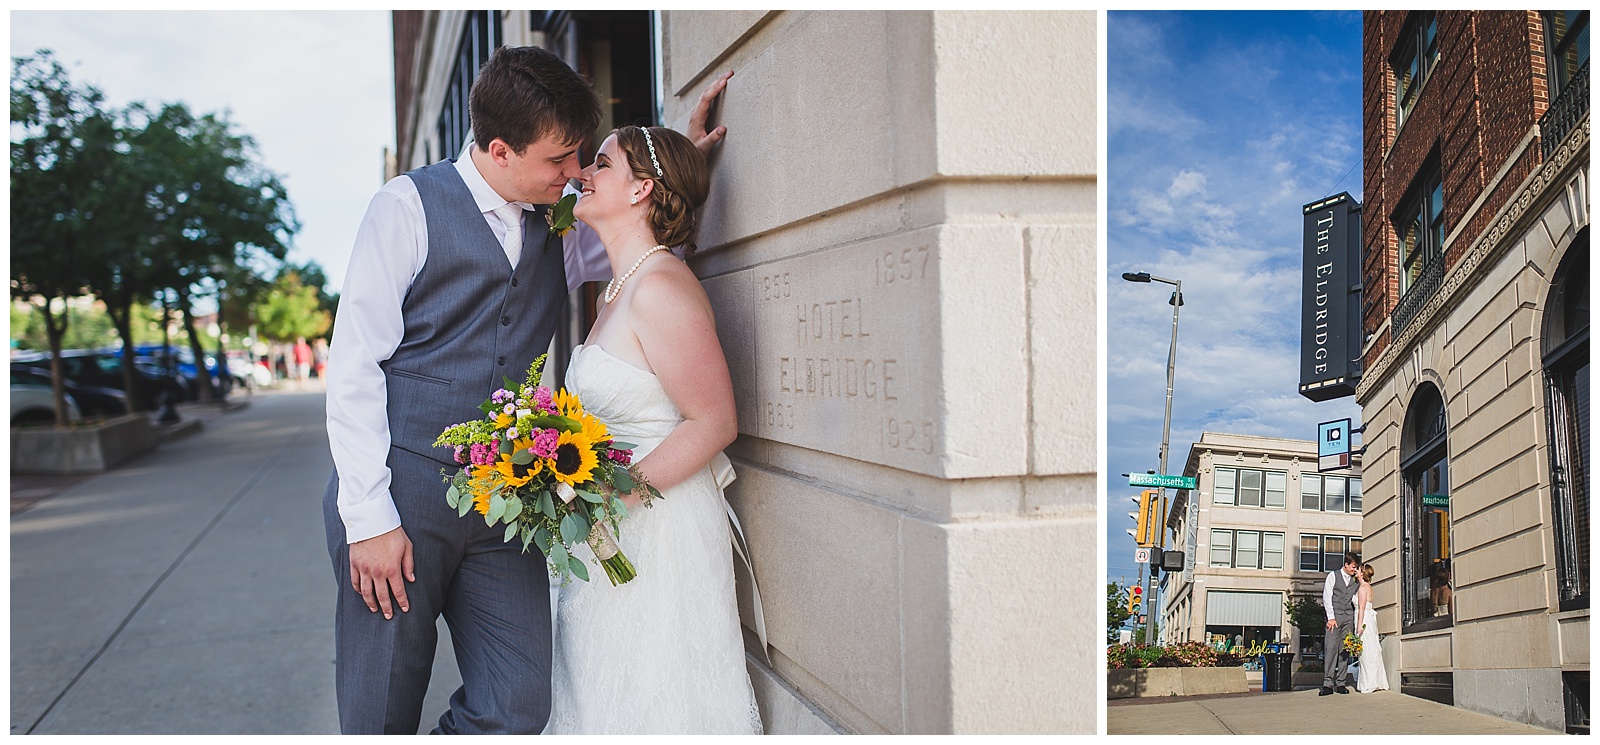 Wedding photography on Mass Street in Lawrence, Kansas.